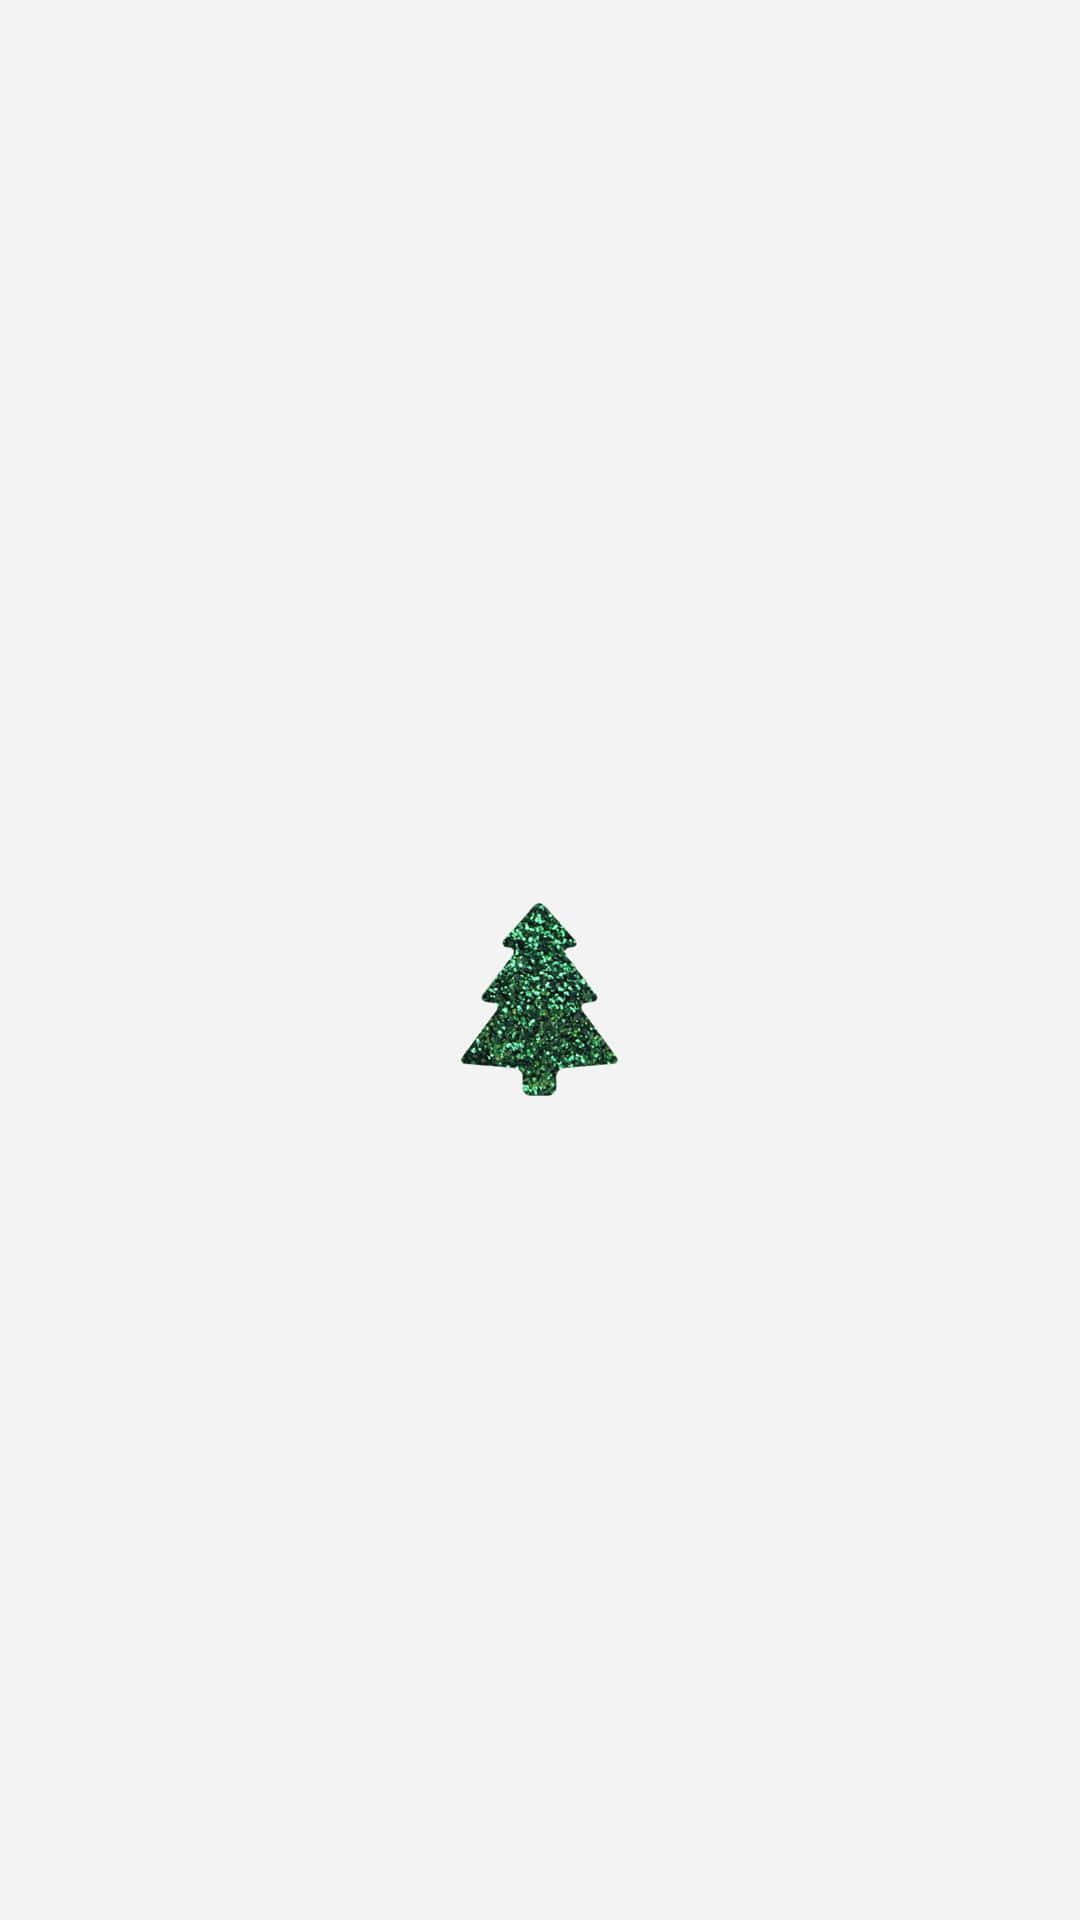 Cute Simple Christmas Small Tree Wallpaper